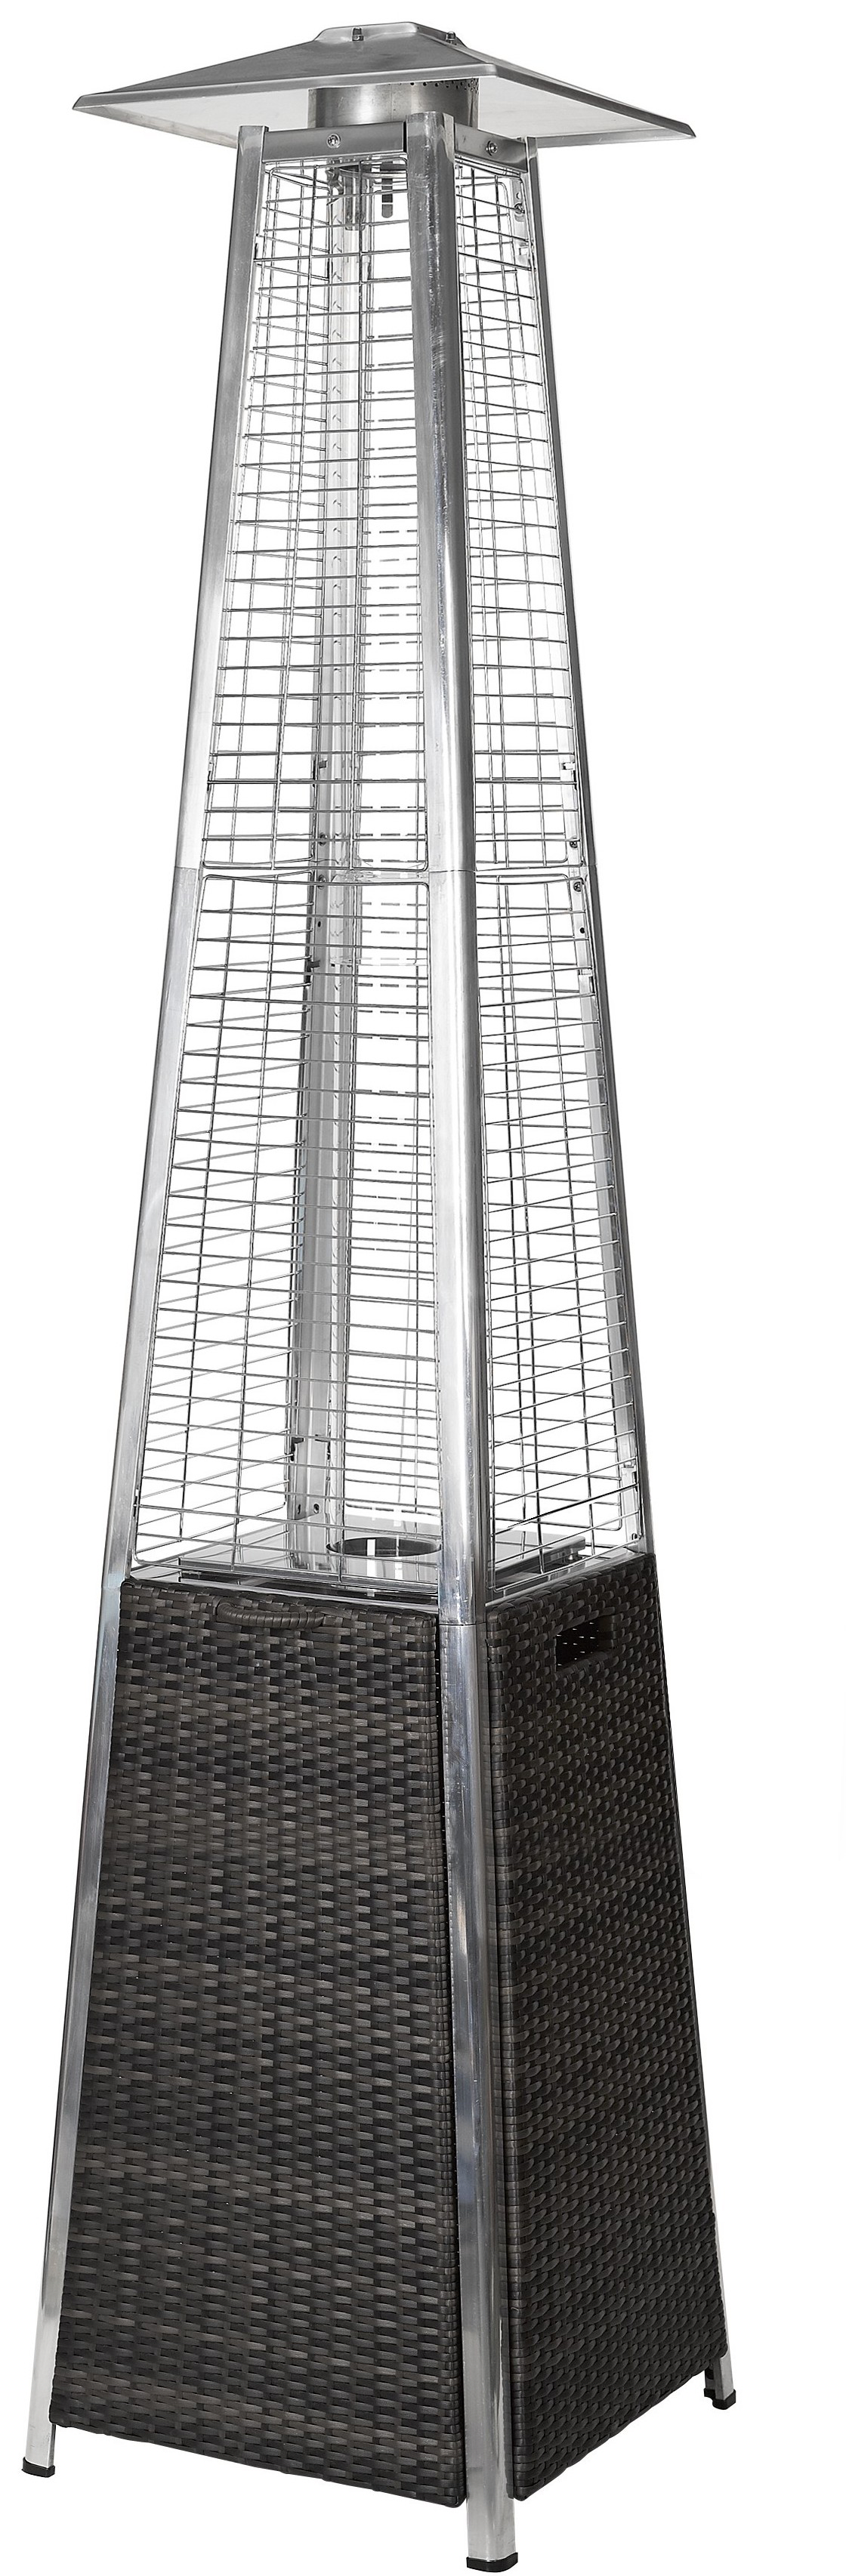 RADtec 89" Tower Flame Propane Patio Heater - Black & Grey Wicker 41,000 BTU - TF1-WK-BLK-GRY - Enlarge View